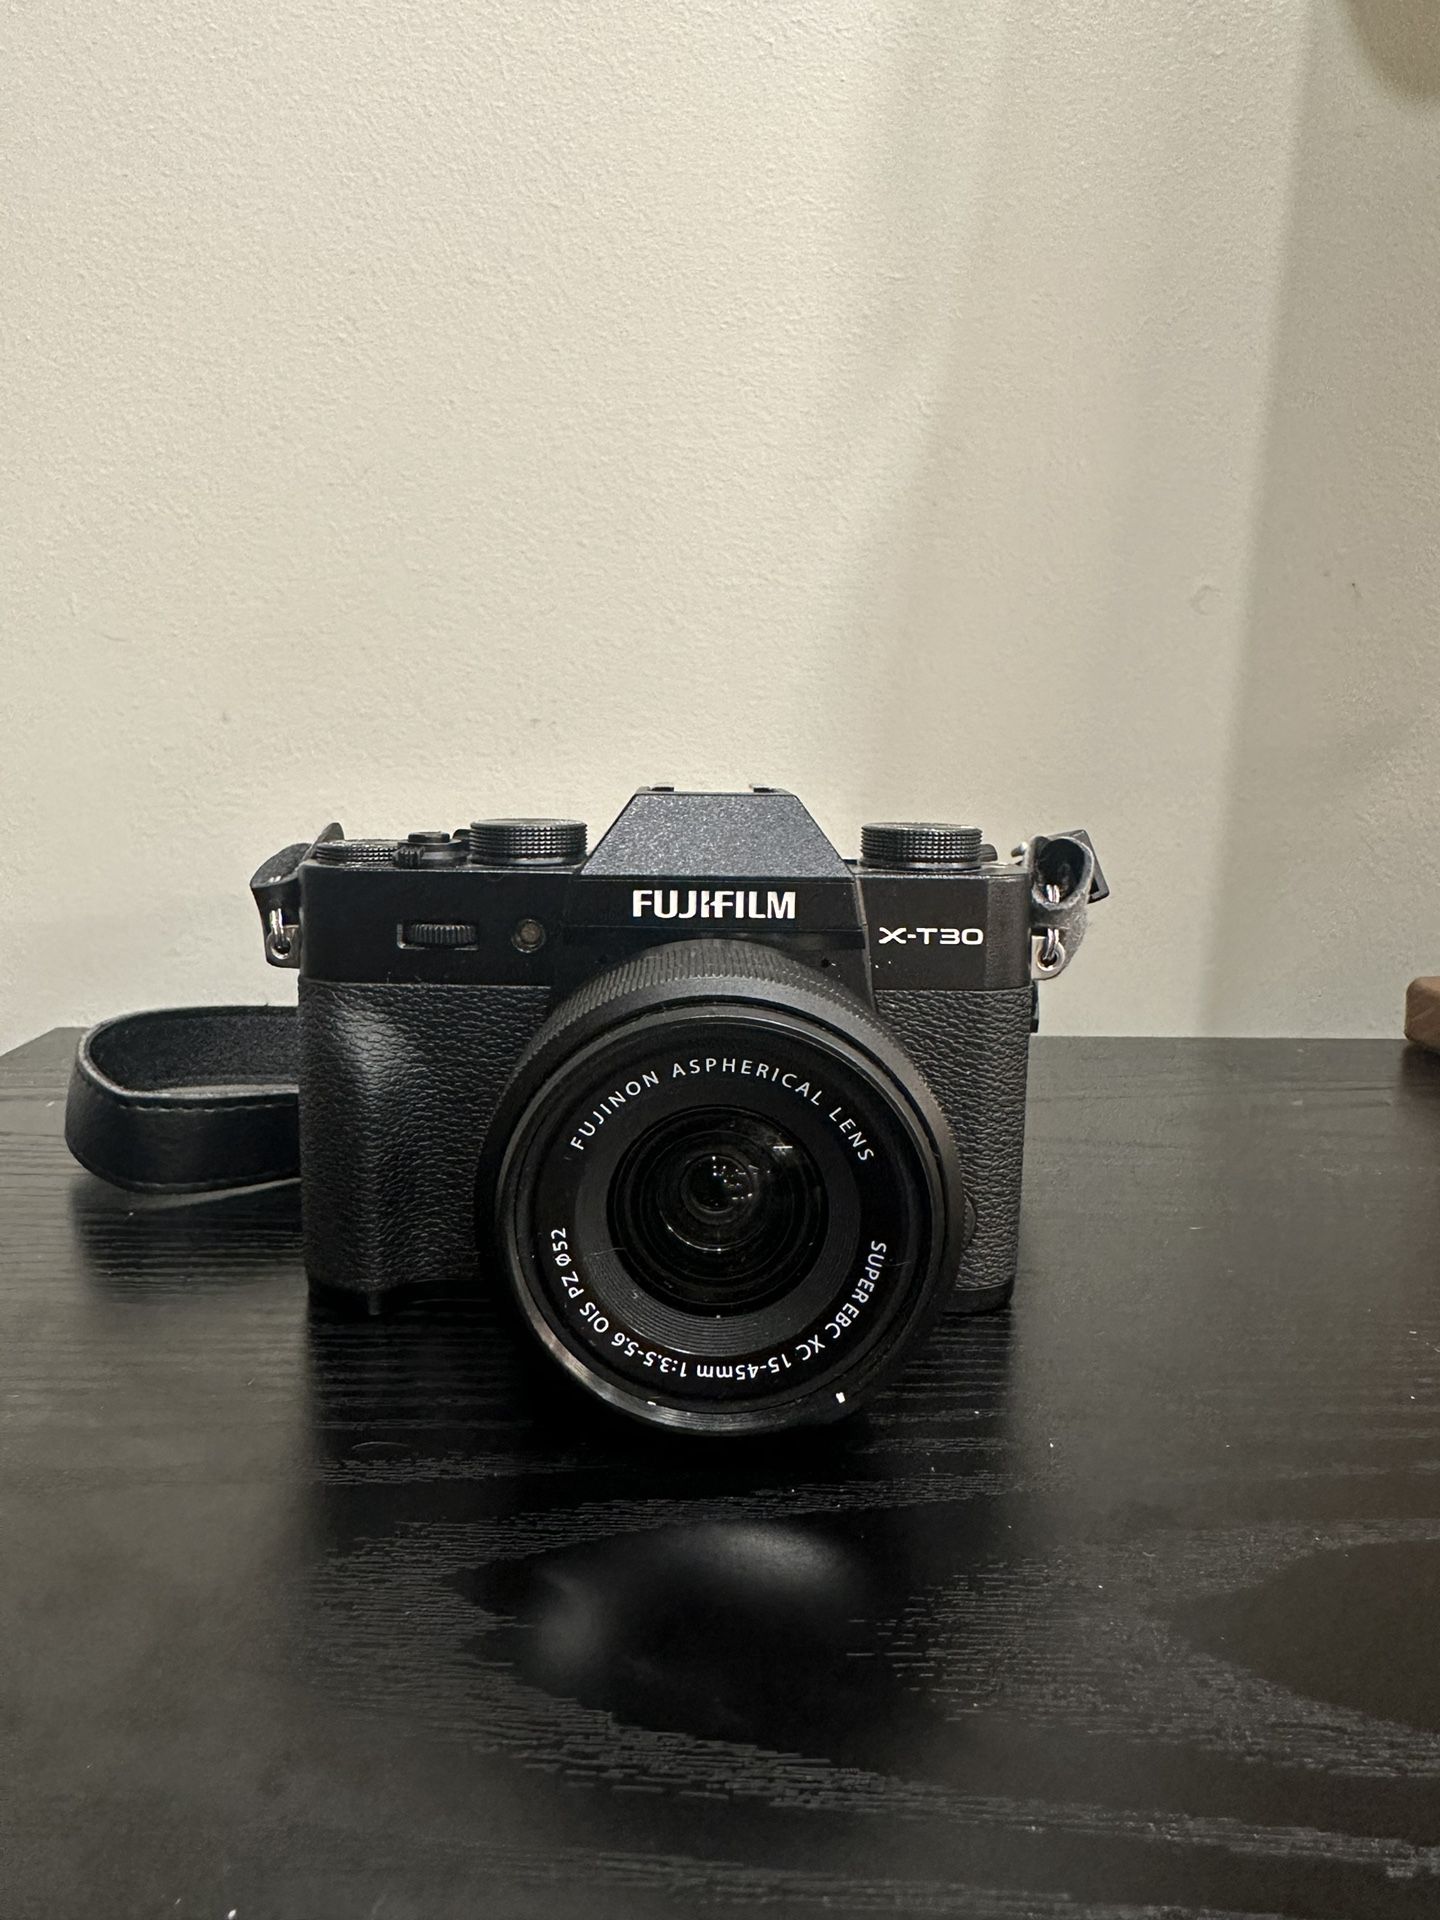 Fujifilm - X Series X-T30 Mirrorless Camera with 15-45mm Lens - Black